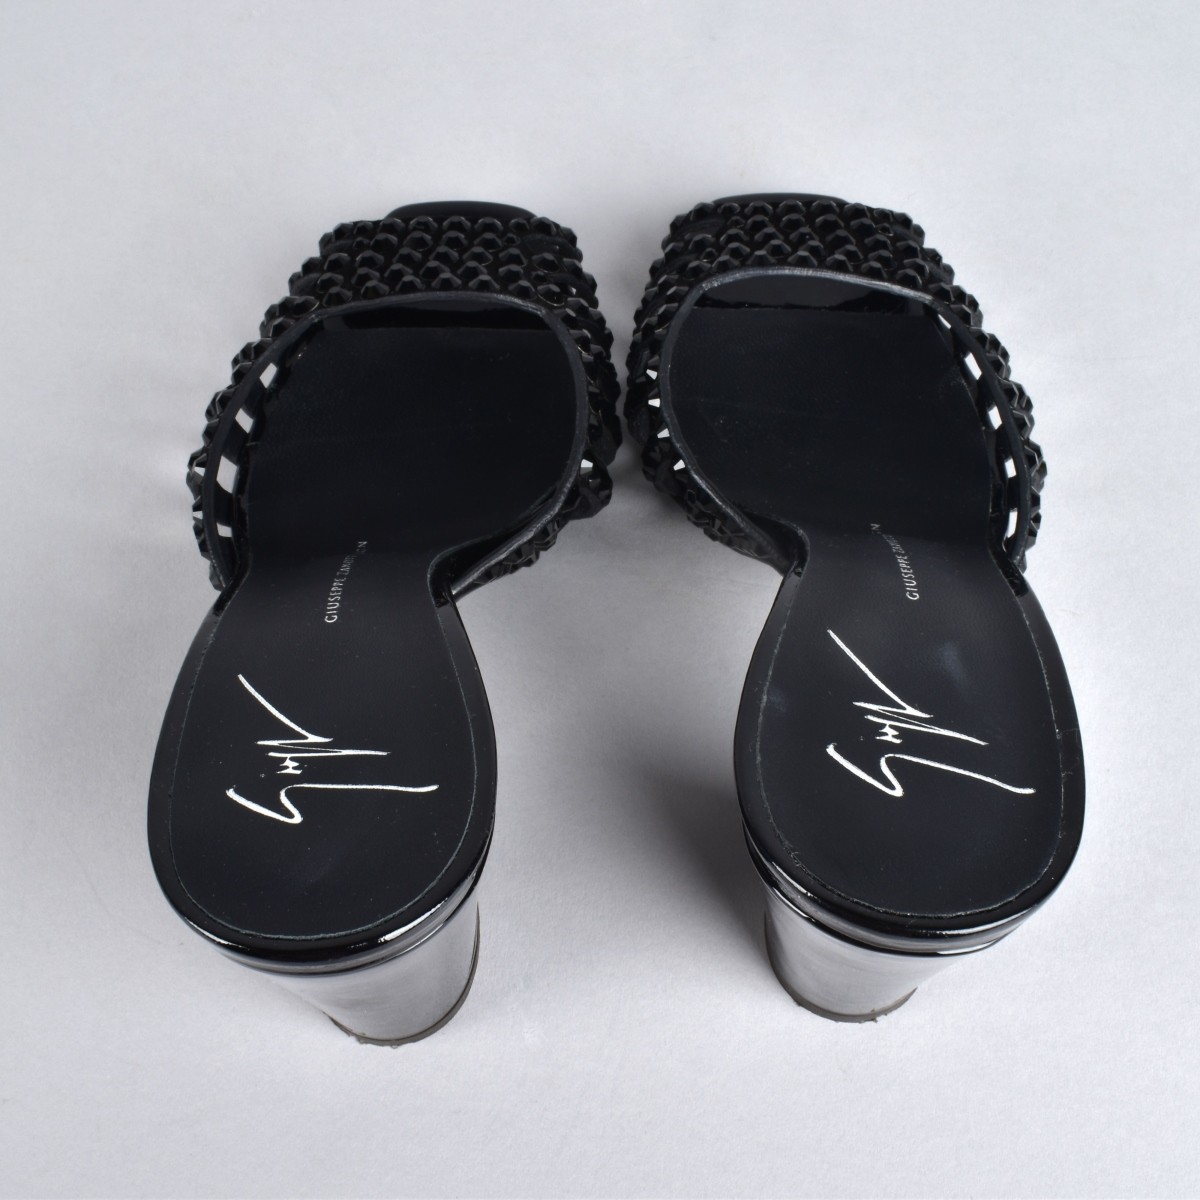 Giuseppe Zanotti Leather Heels